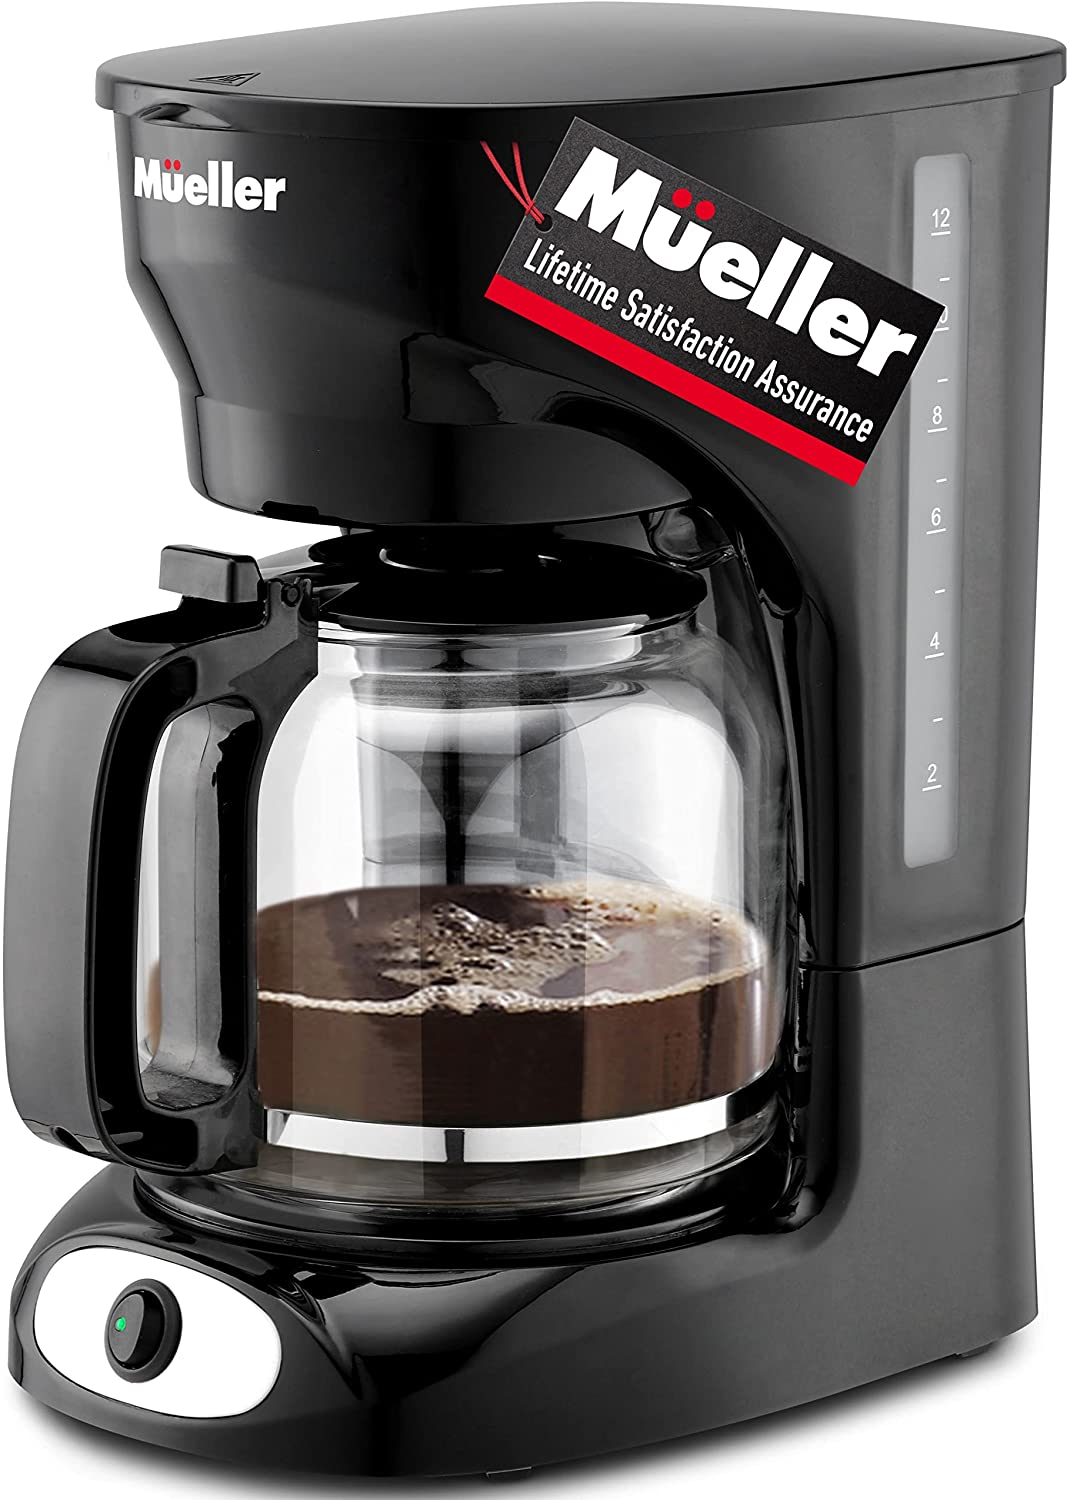 Mueller 12-Cup Drip Coffee Maker